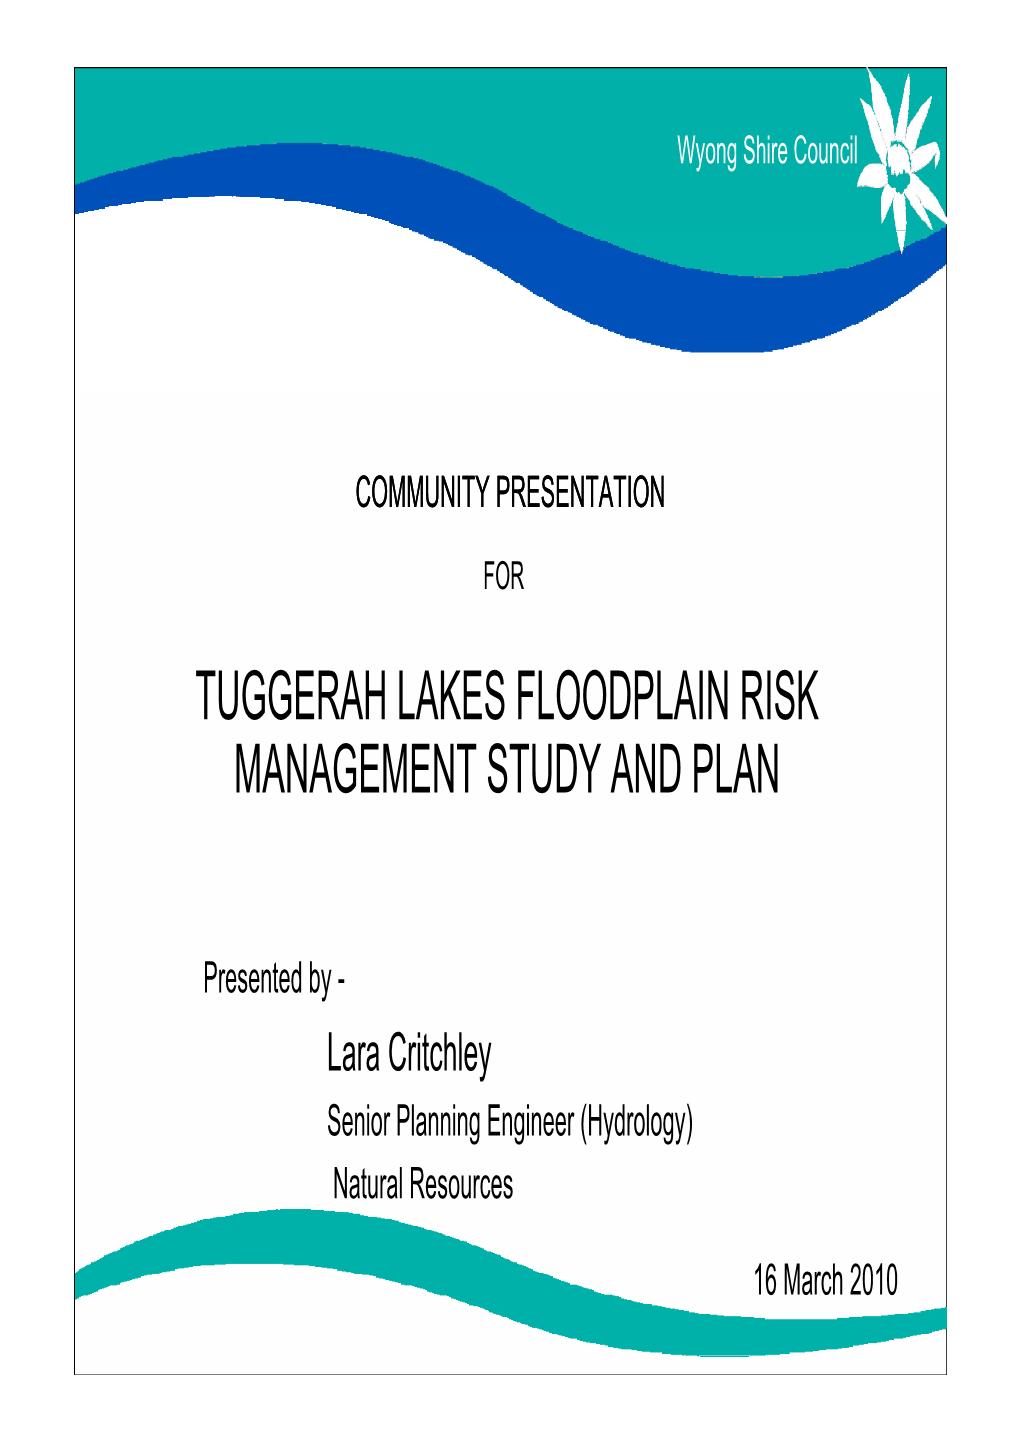 Tuggerah Lakes Floodplain Risk Management Study and Plan